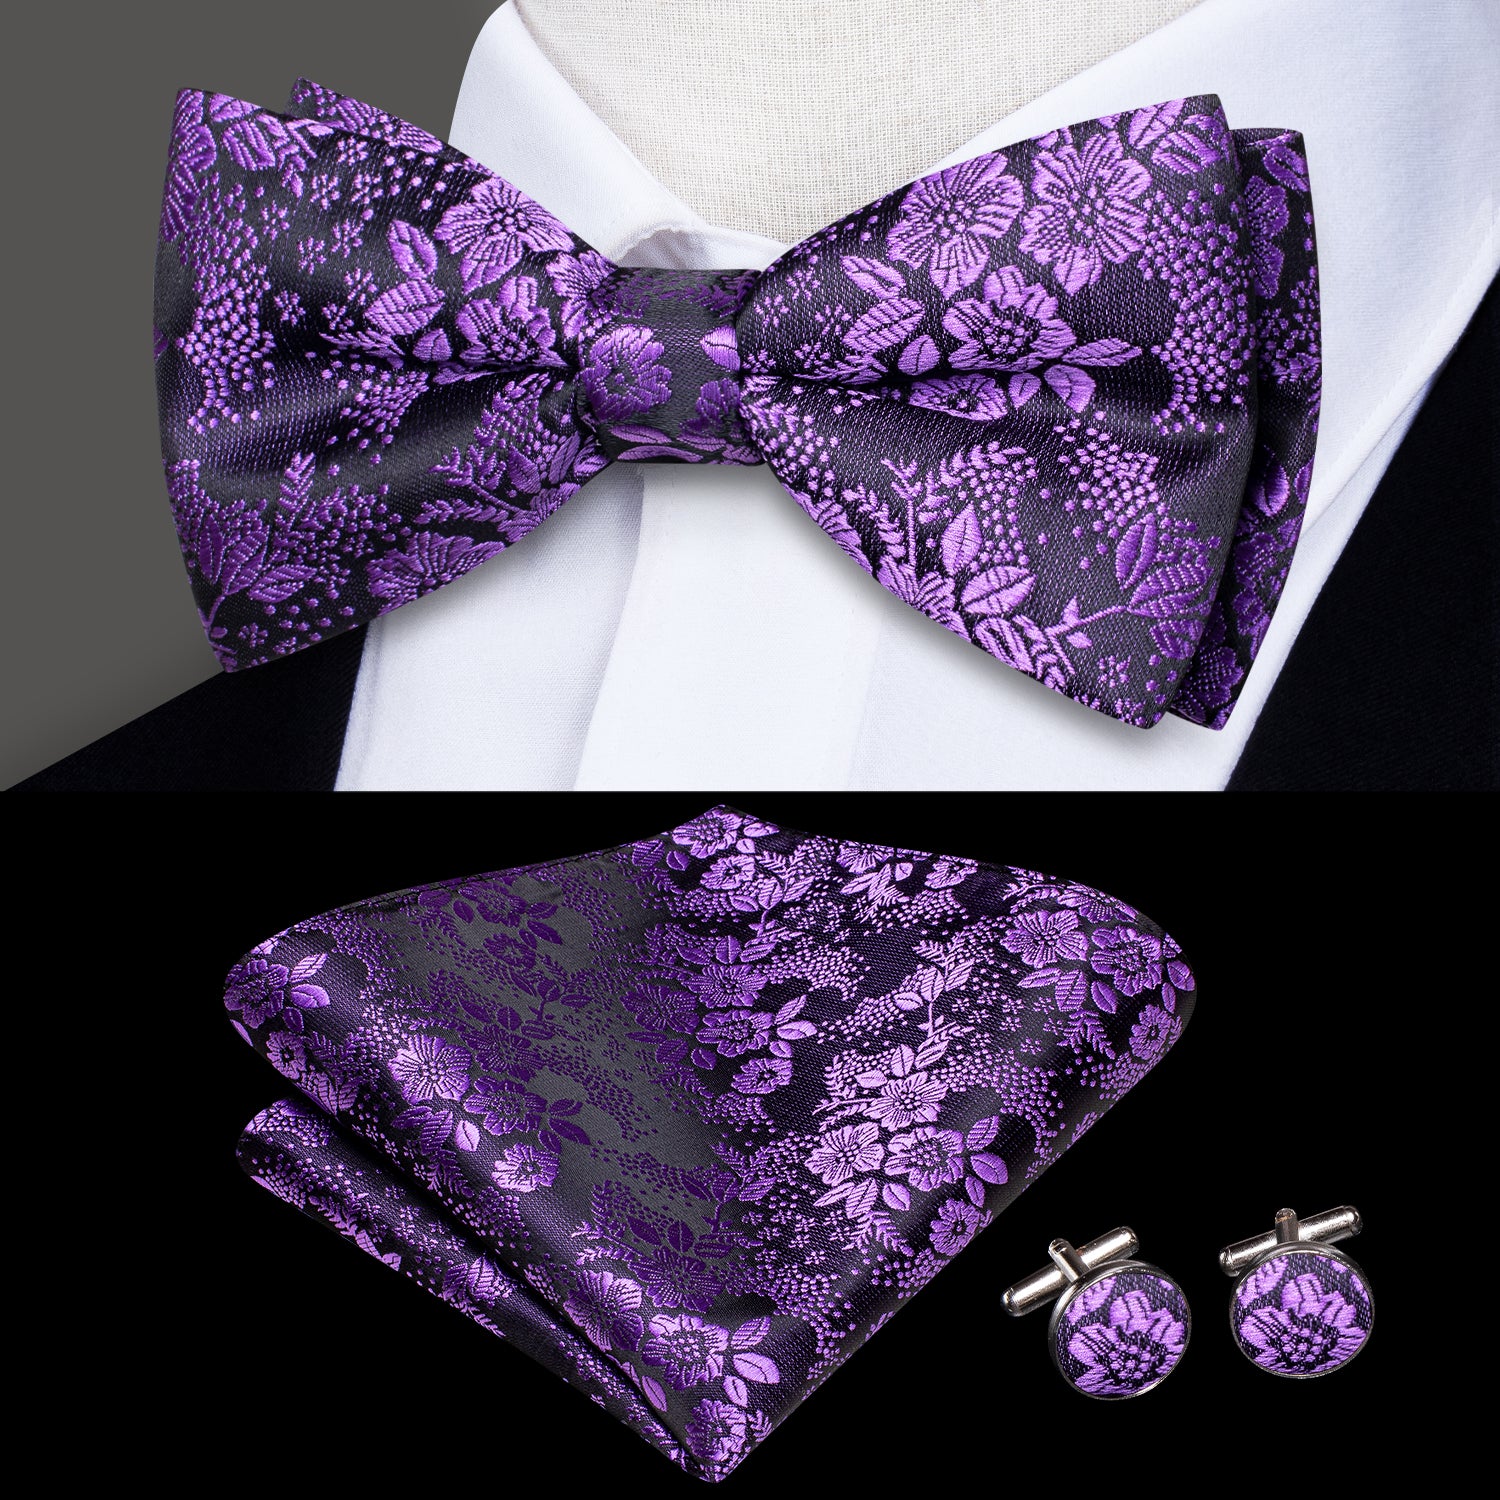 New Purple Floral Silk Pre-tied Bow Tie Hanky Cufflinks Set